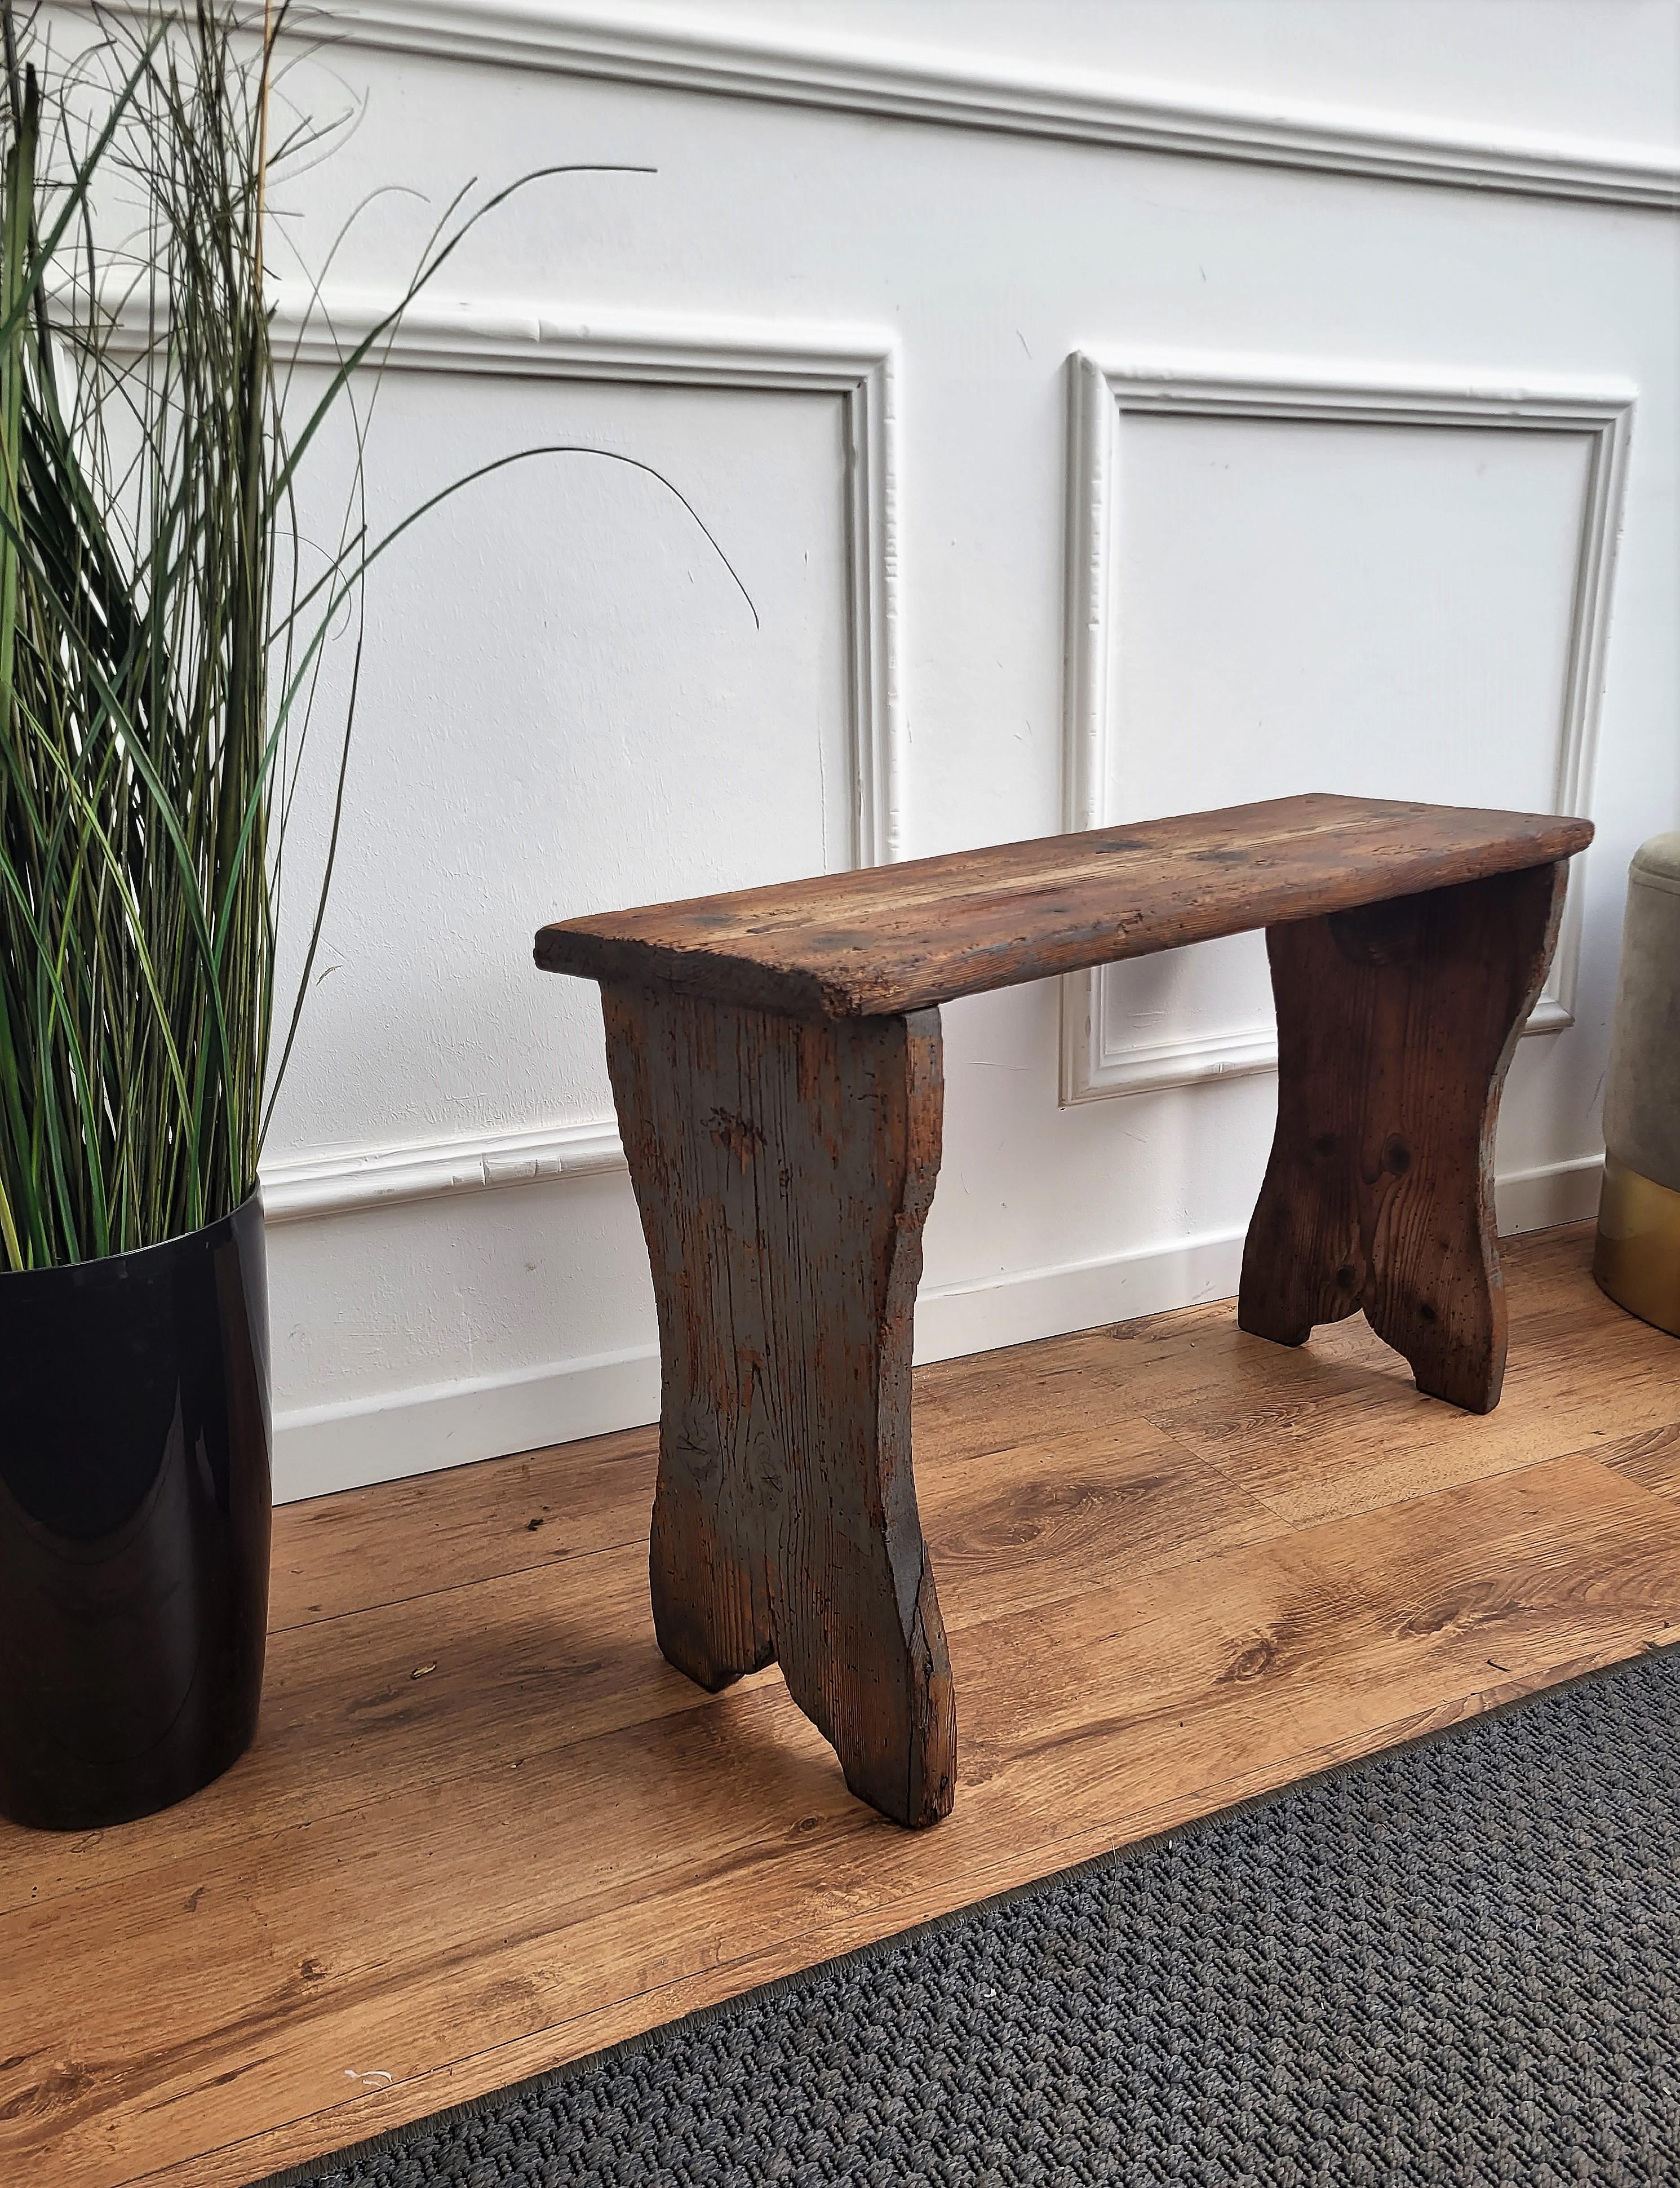 Primitive Rustic Minimal Italian Midcentury Wooden Side Table Bench Stool 1